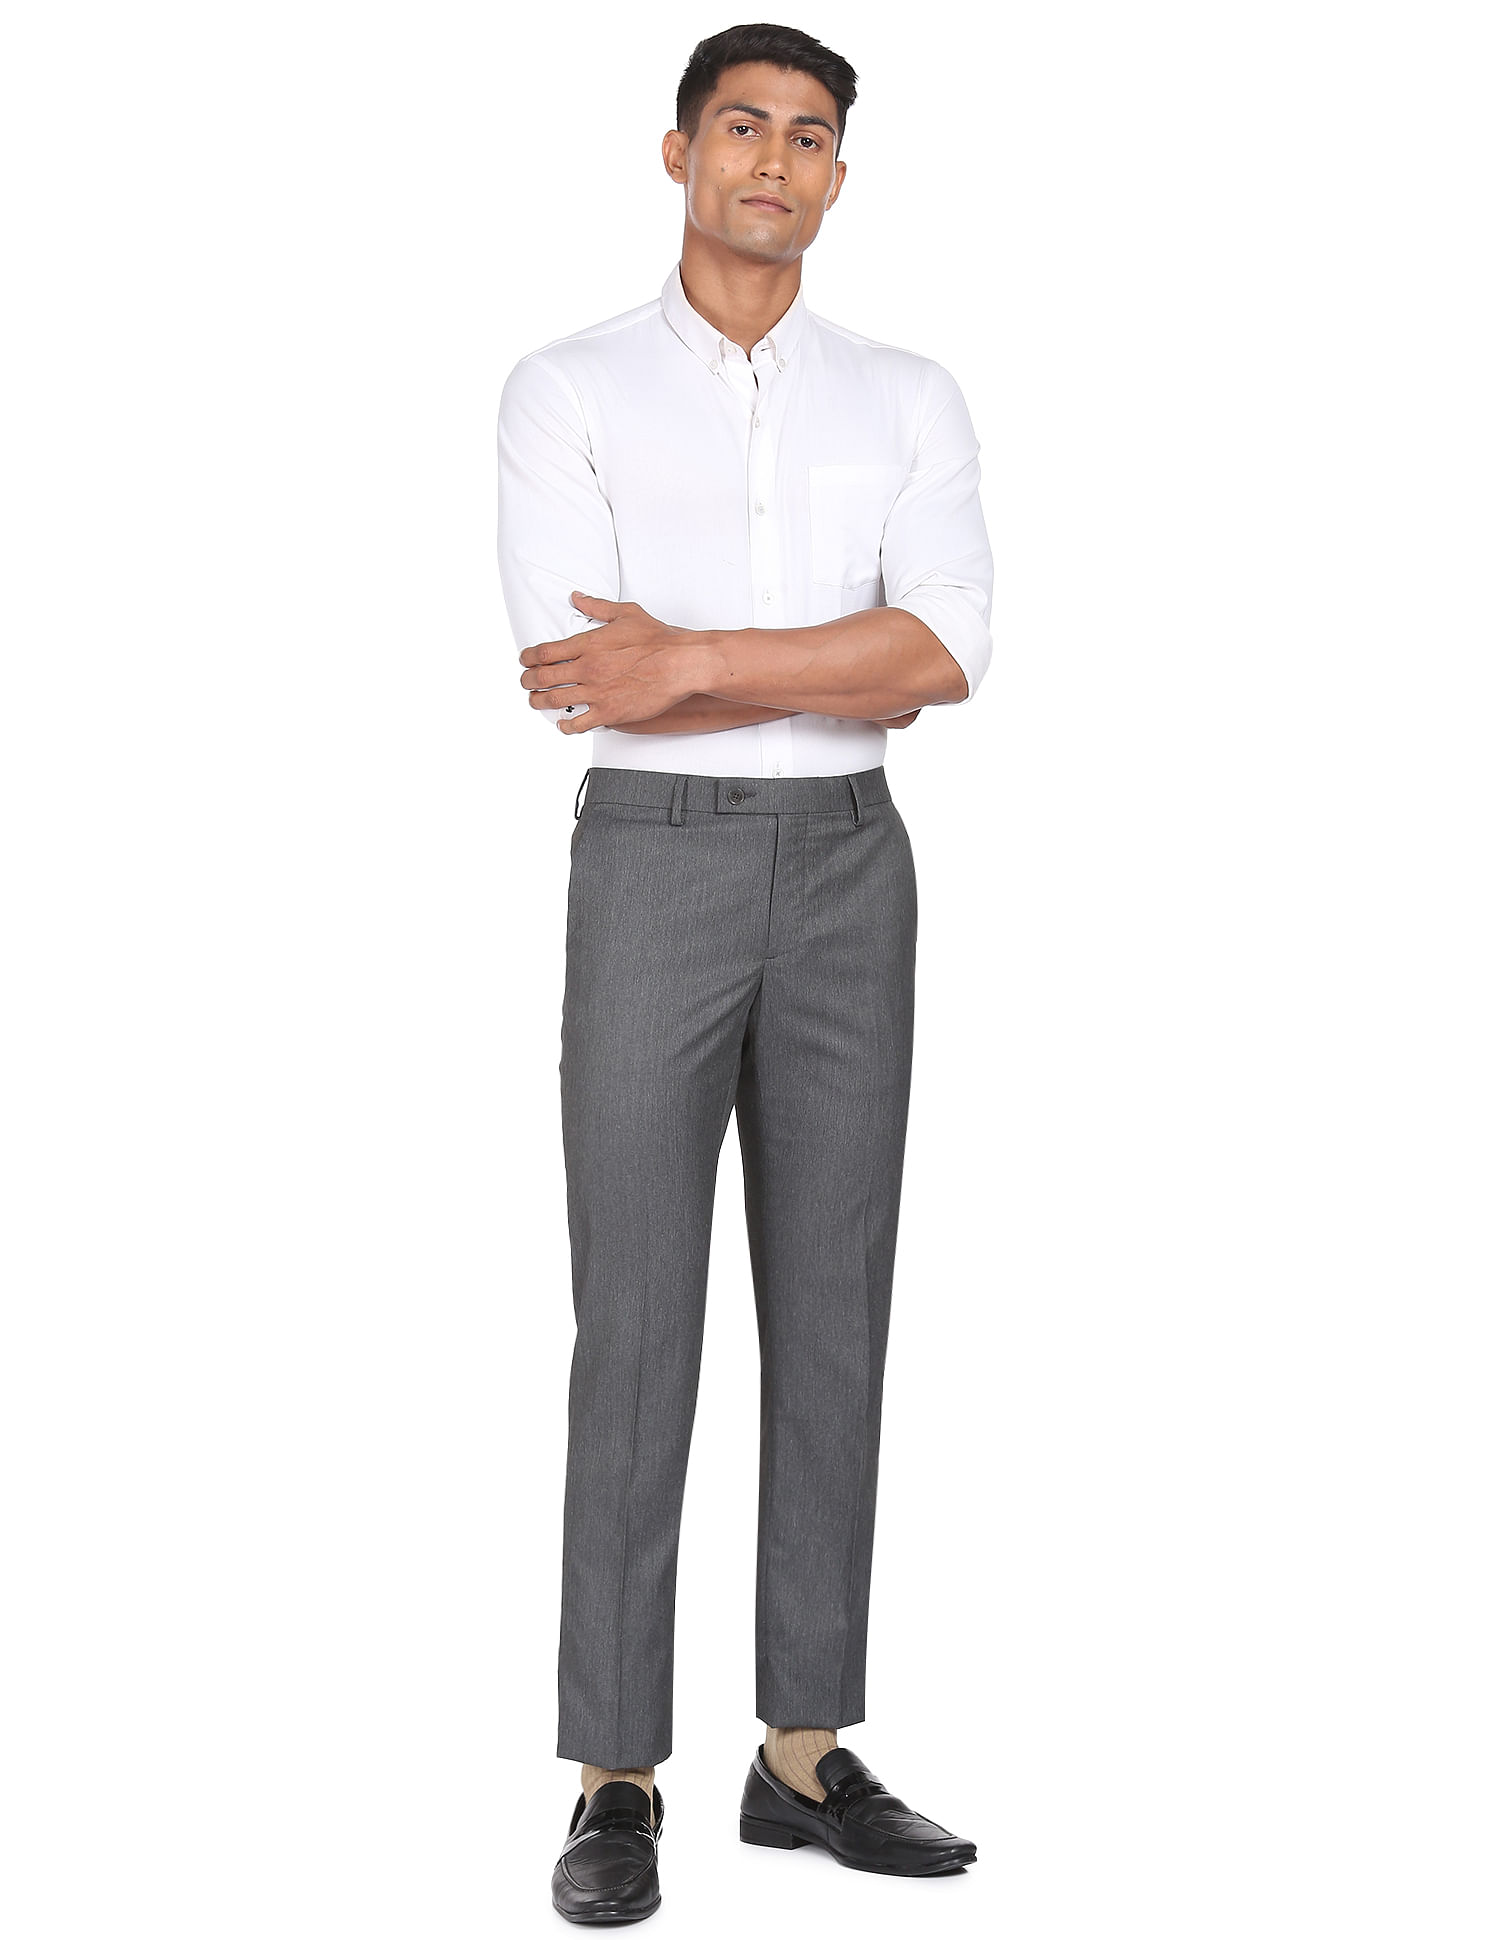 Men's Grey Pants | Explore our New Arrivals | ZARA United States